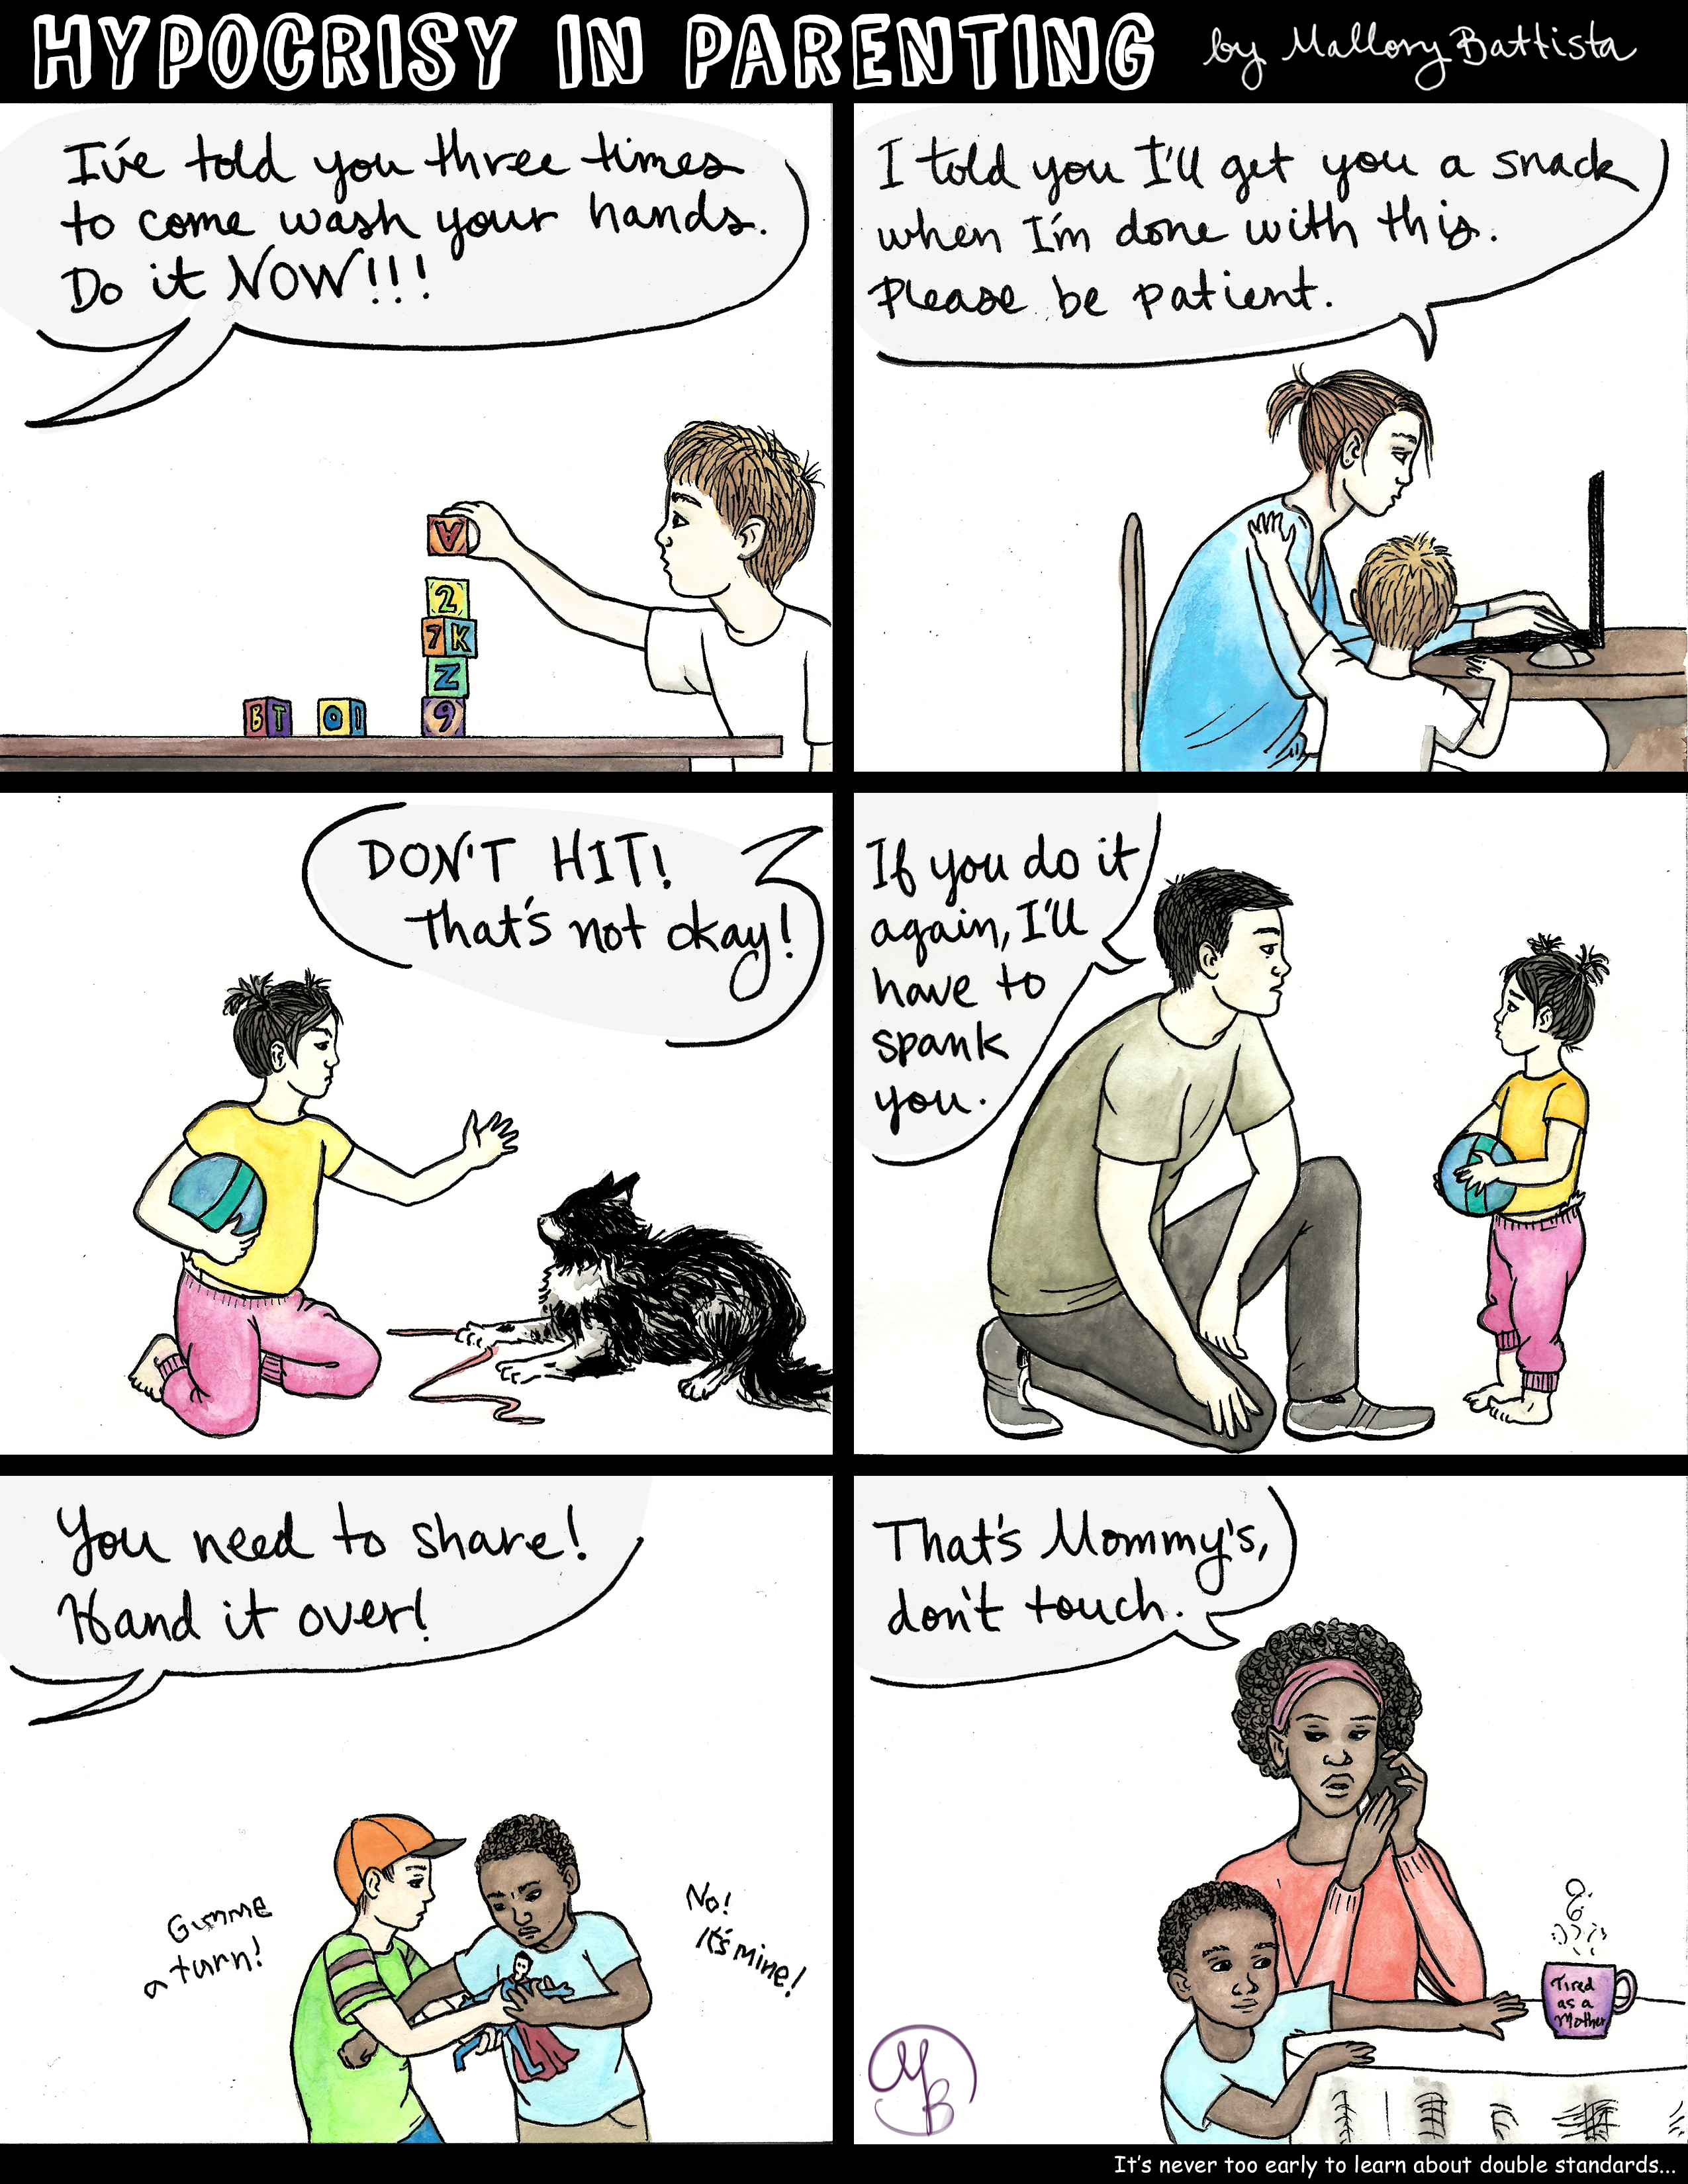 Hypocrisy in Parenting Comic - by Mallory Battista